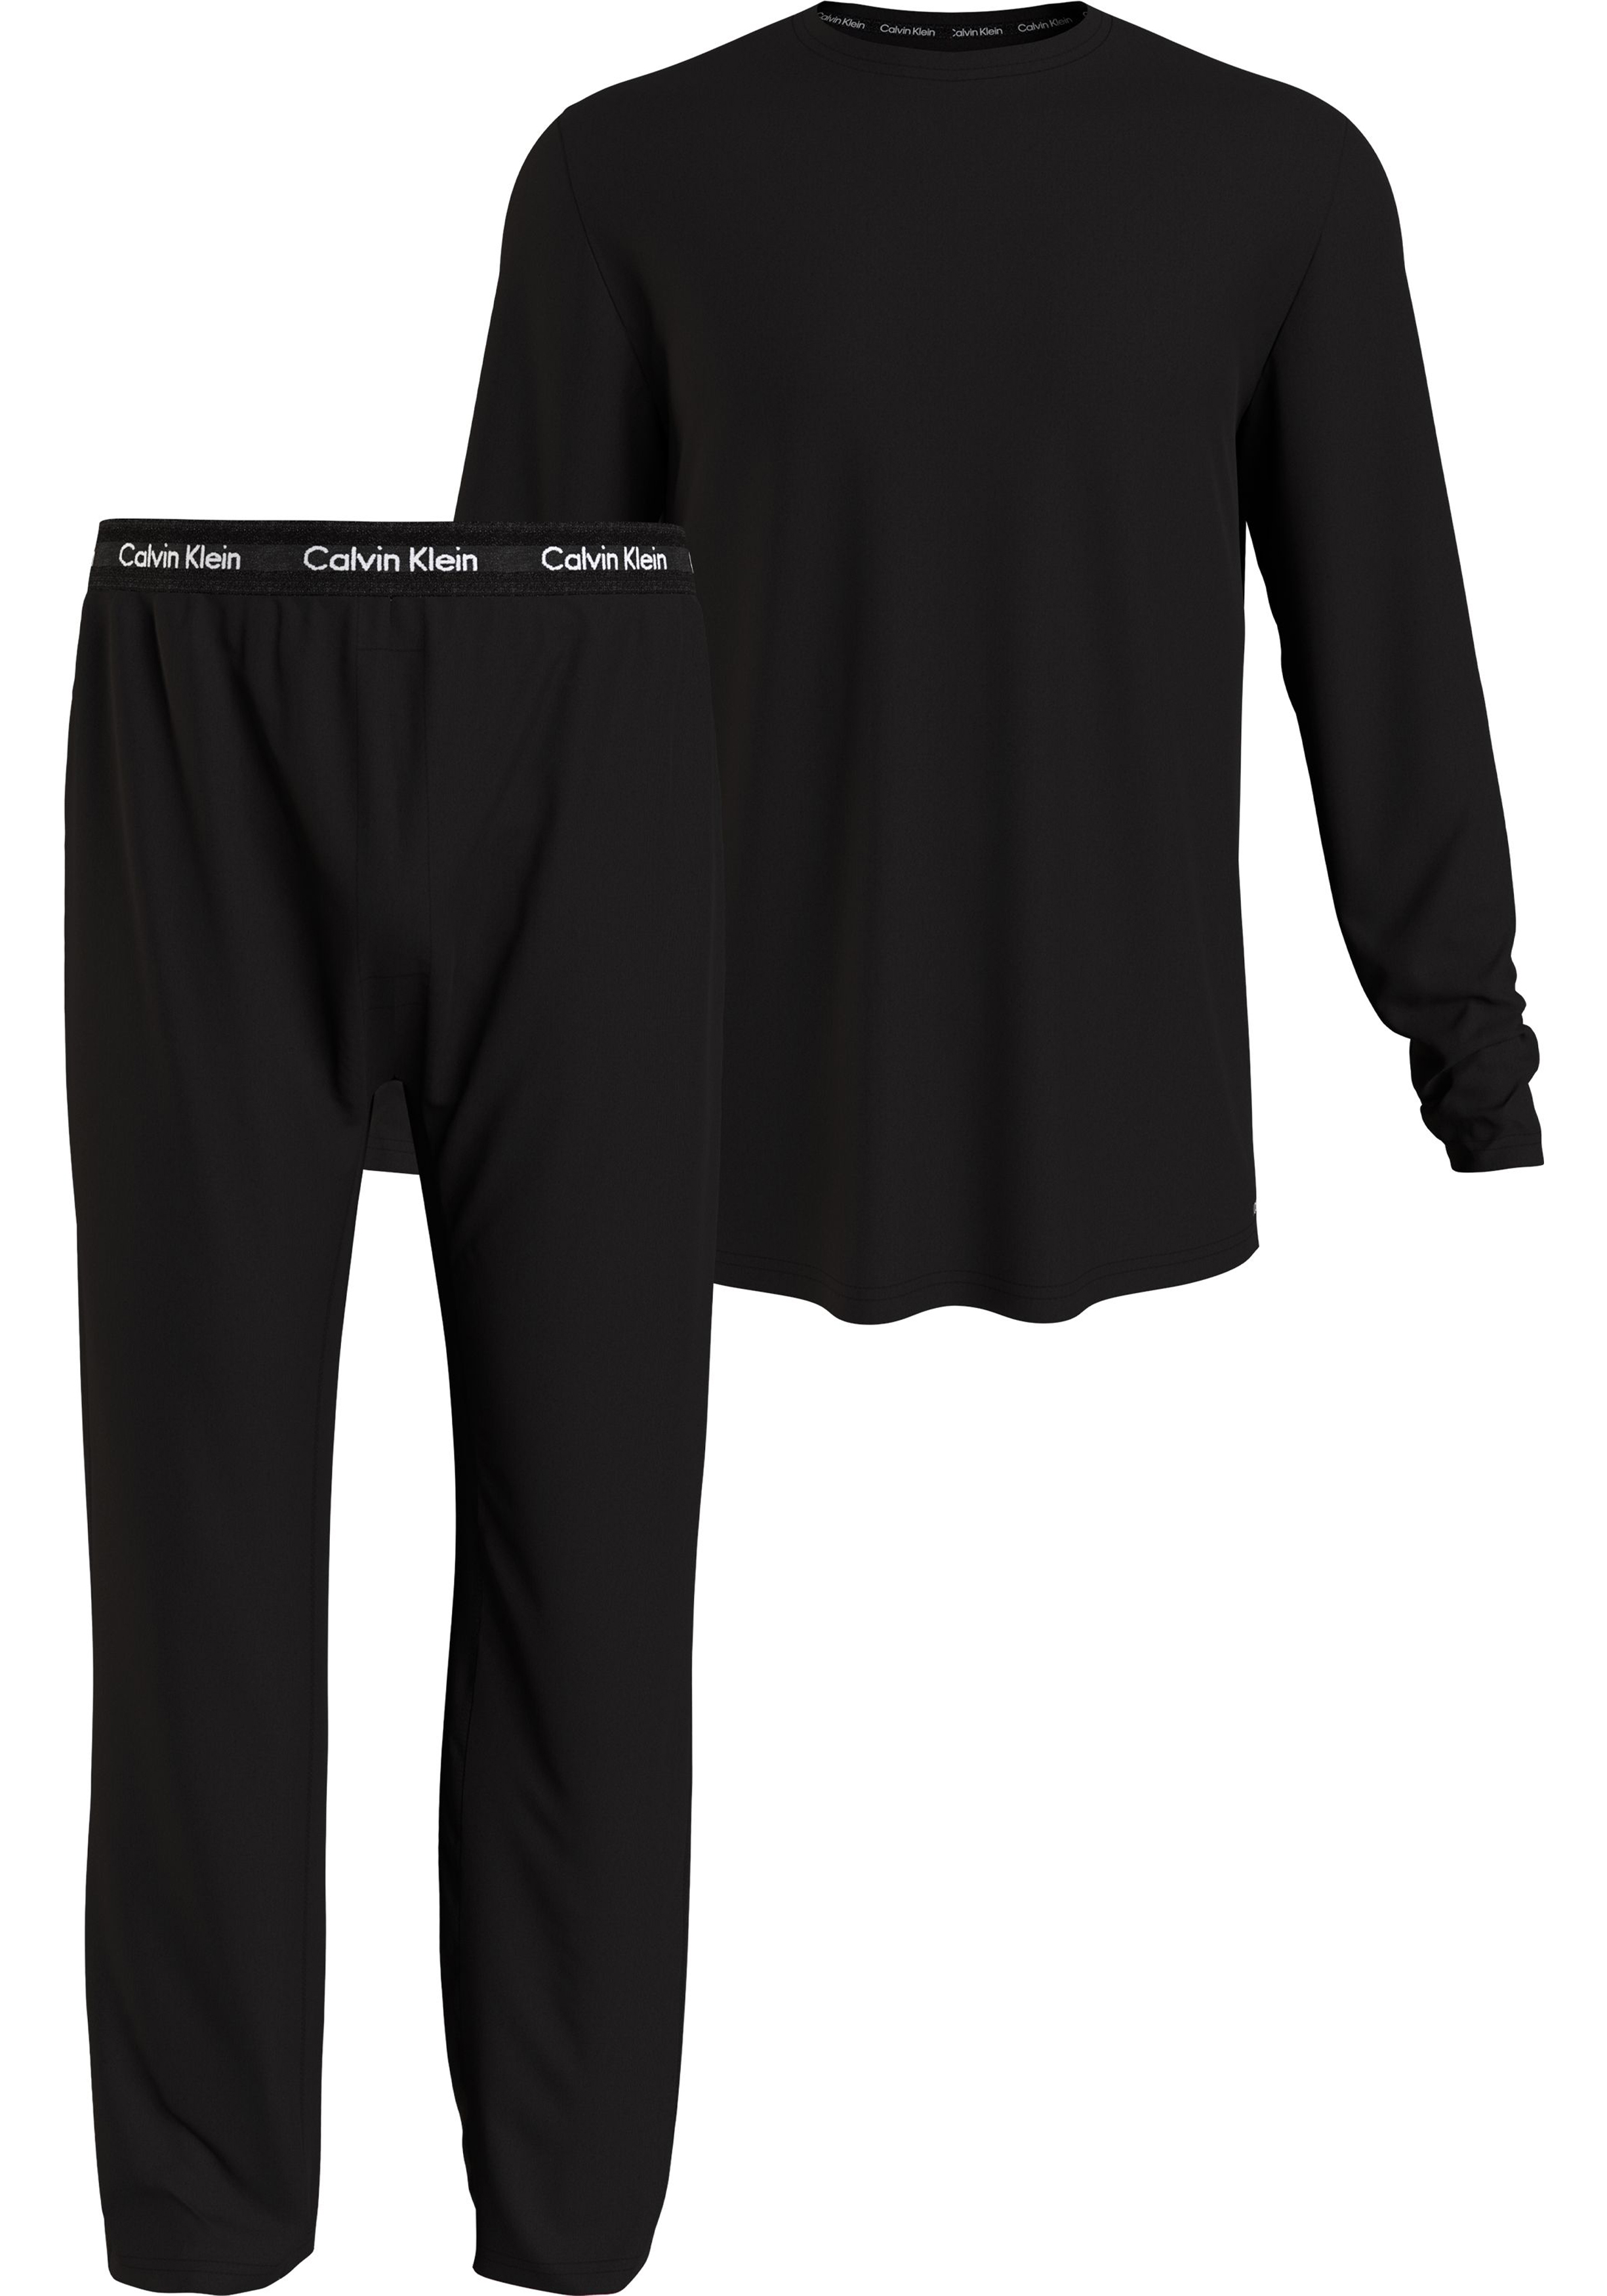 Calvin Klein pyjama, heren long sleeve pant set, zwart